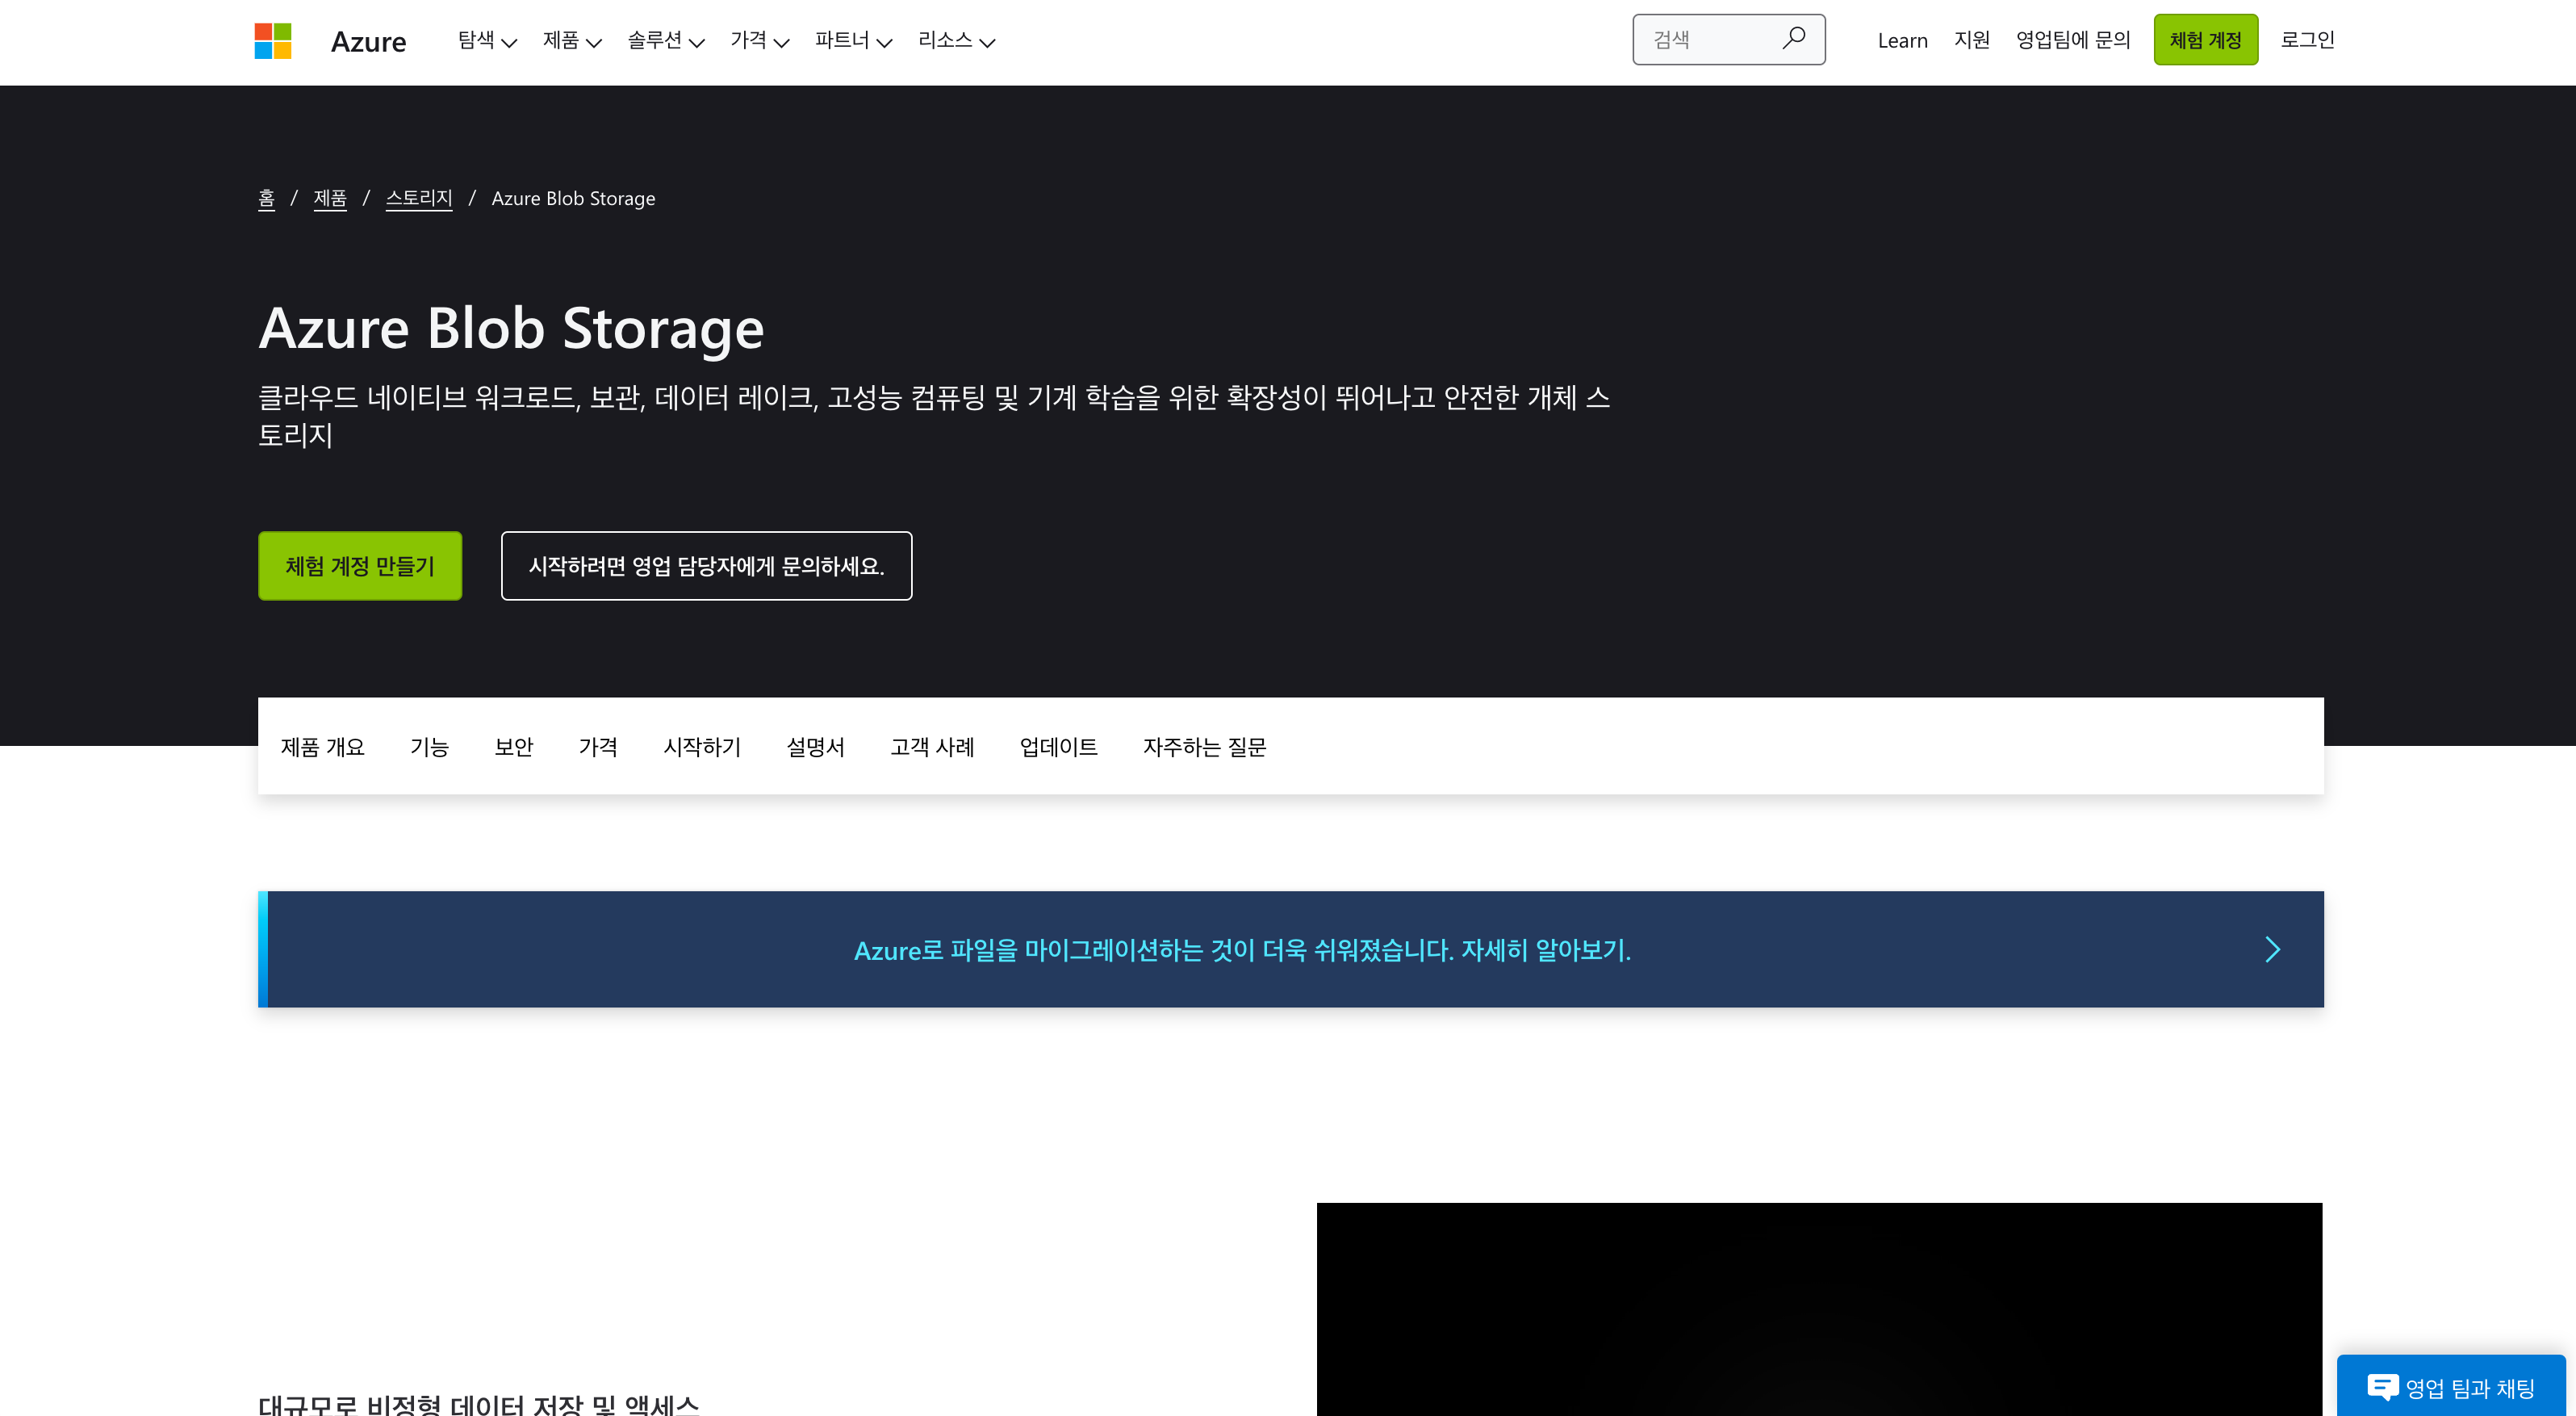 MS Azure Blob Storage 화면